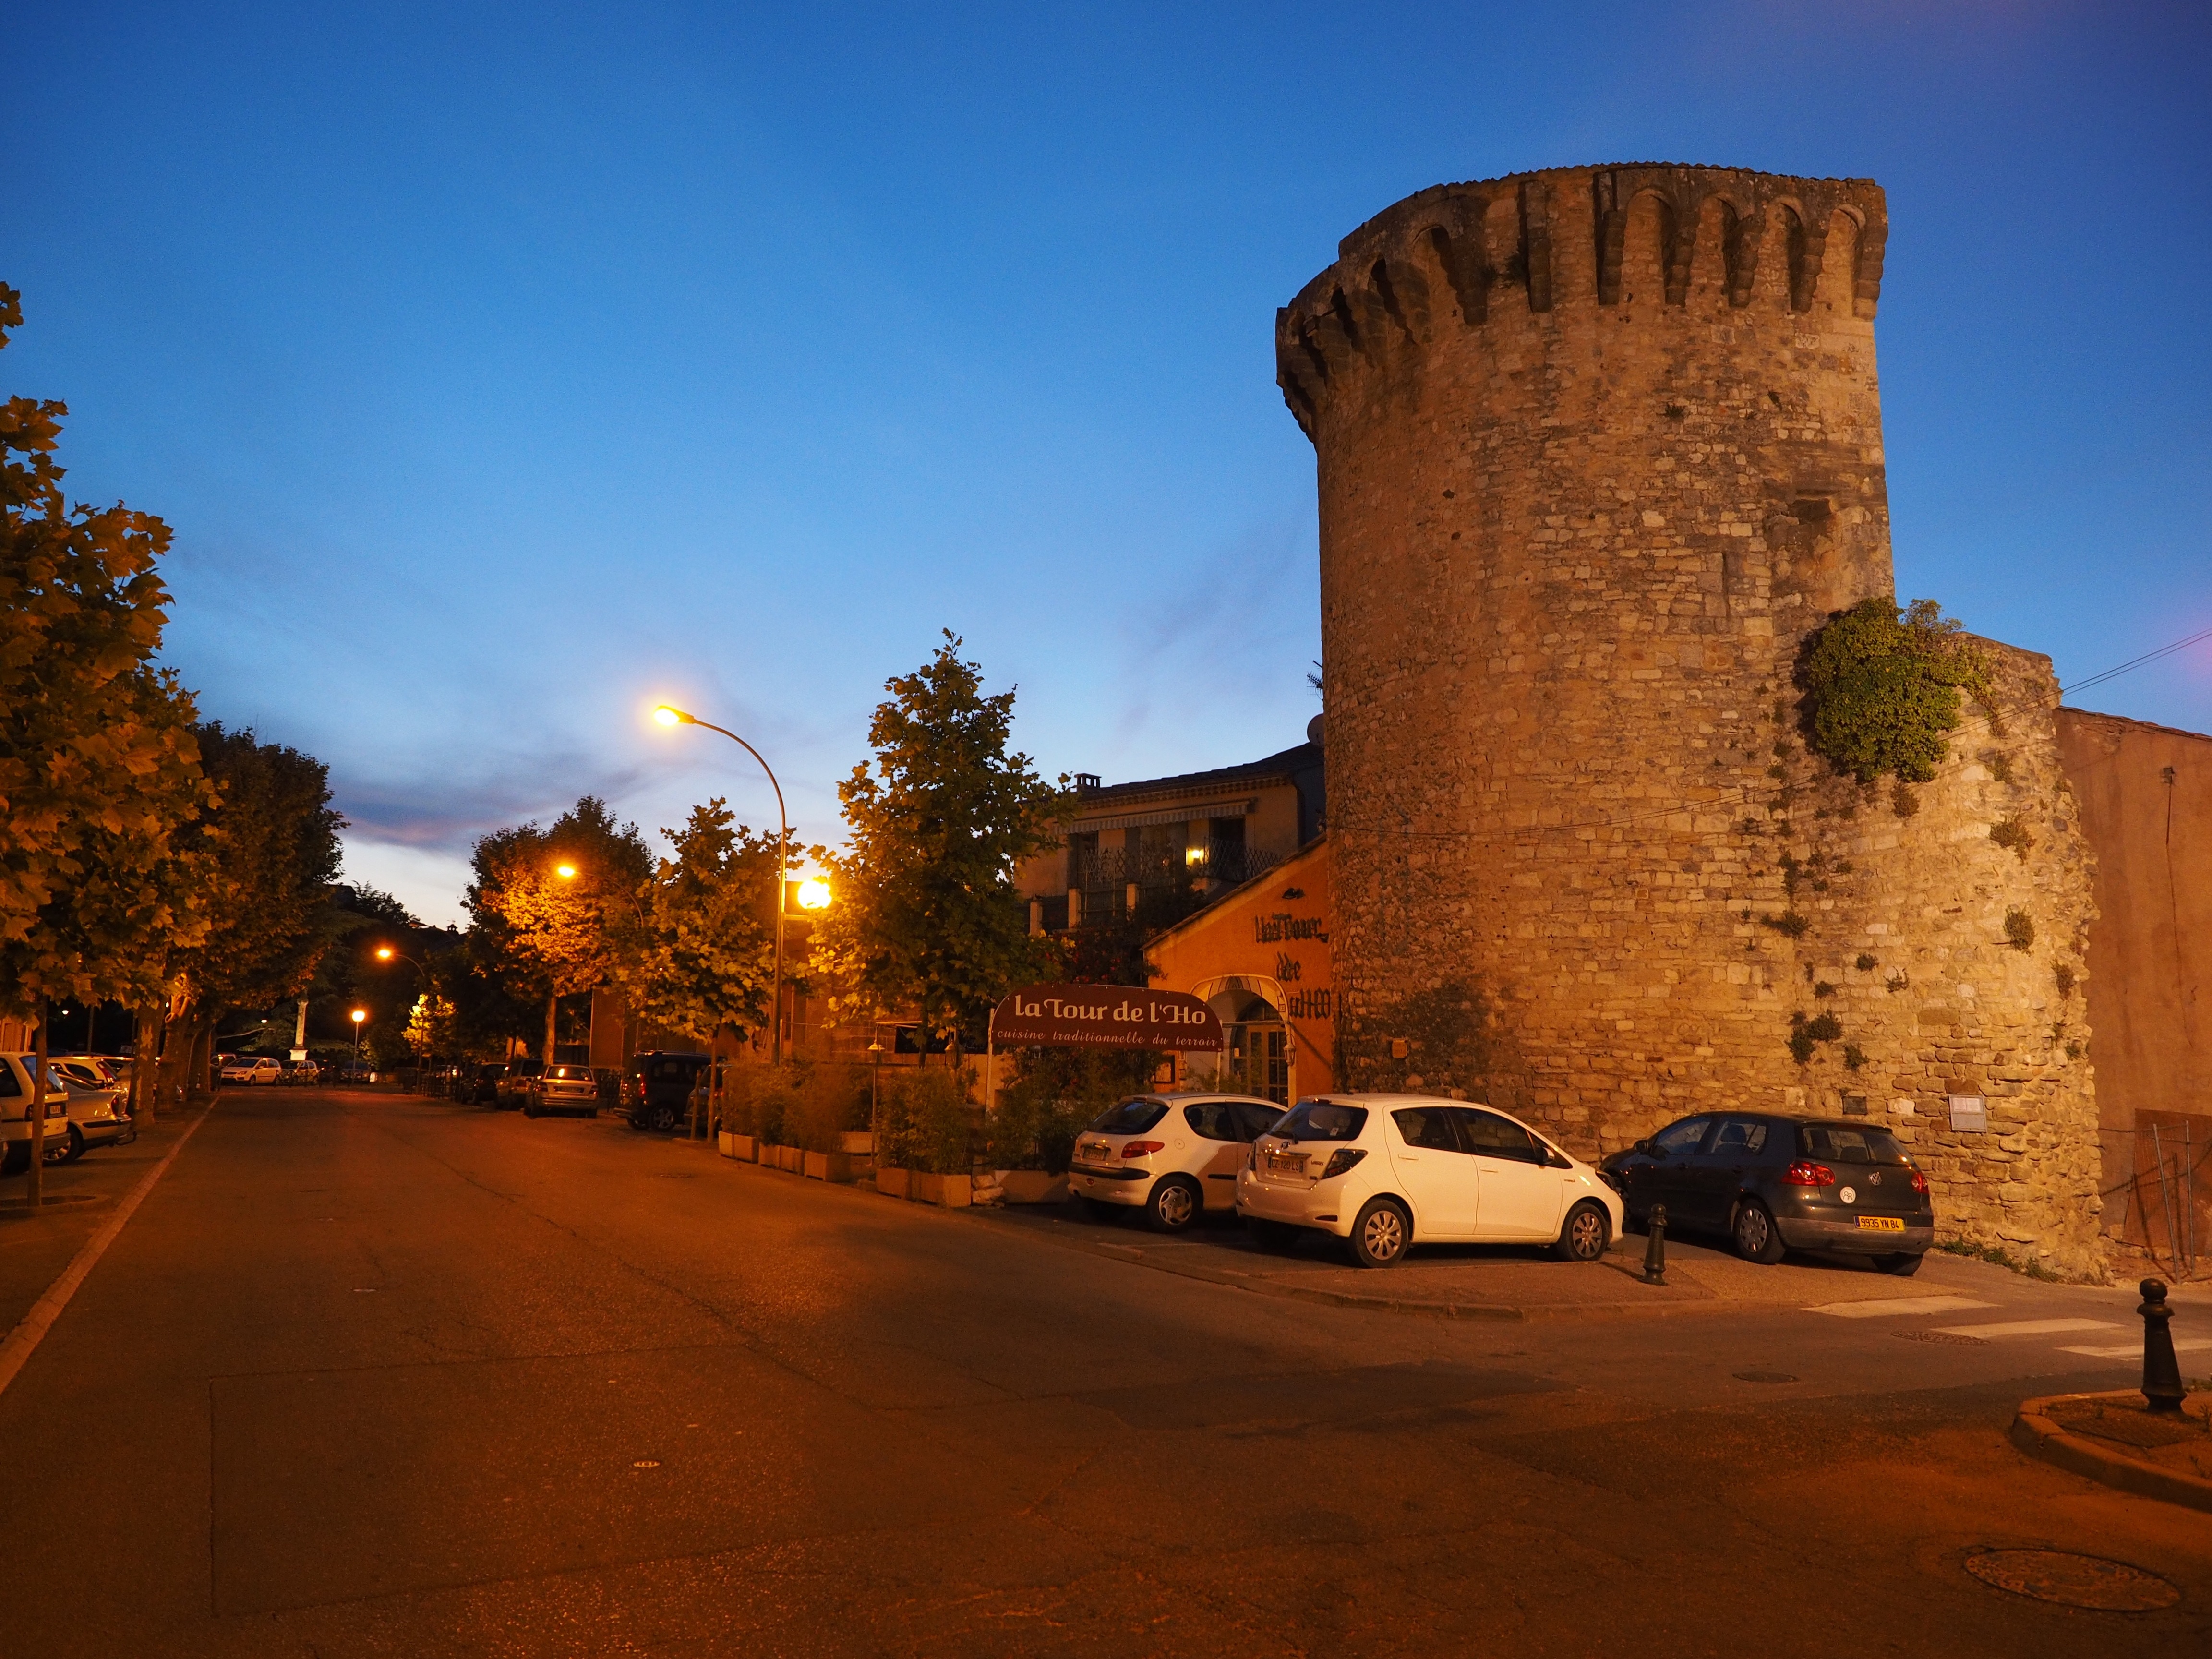 Apt-En-Luberon, Apt, Tower, Restaurant, car, history